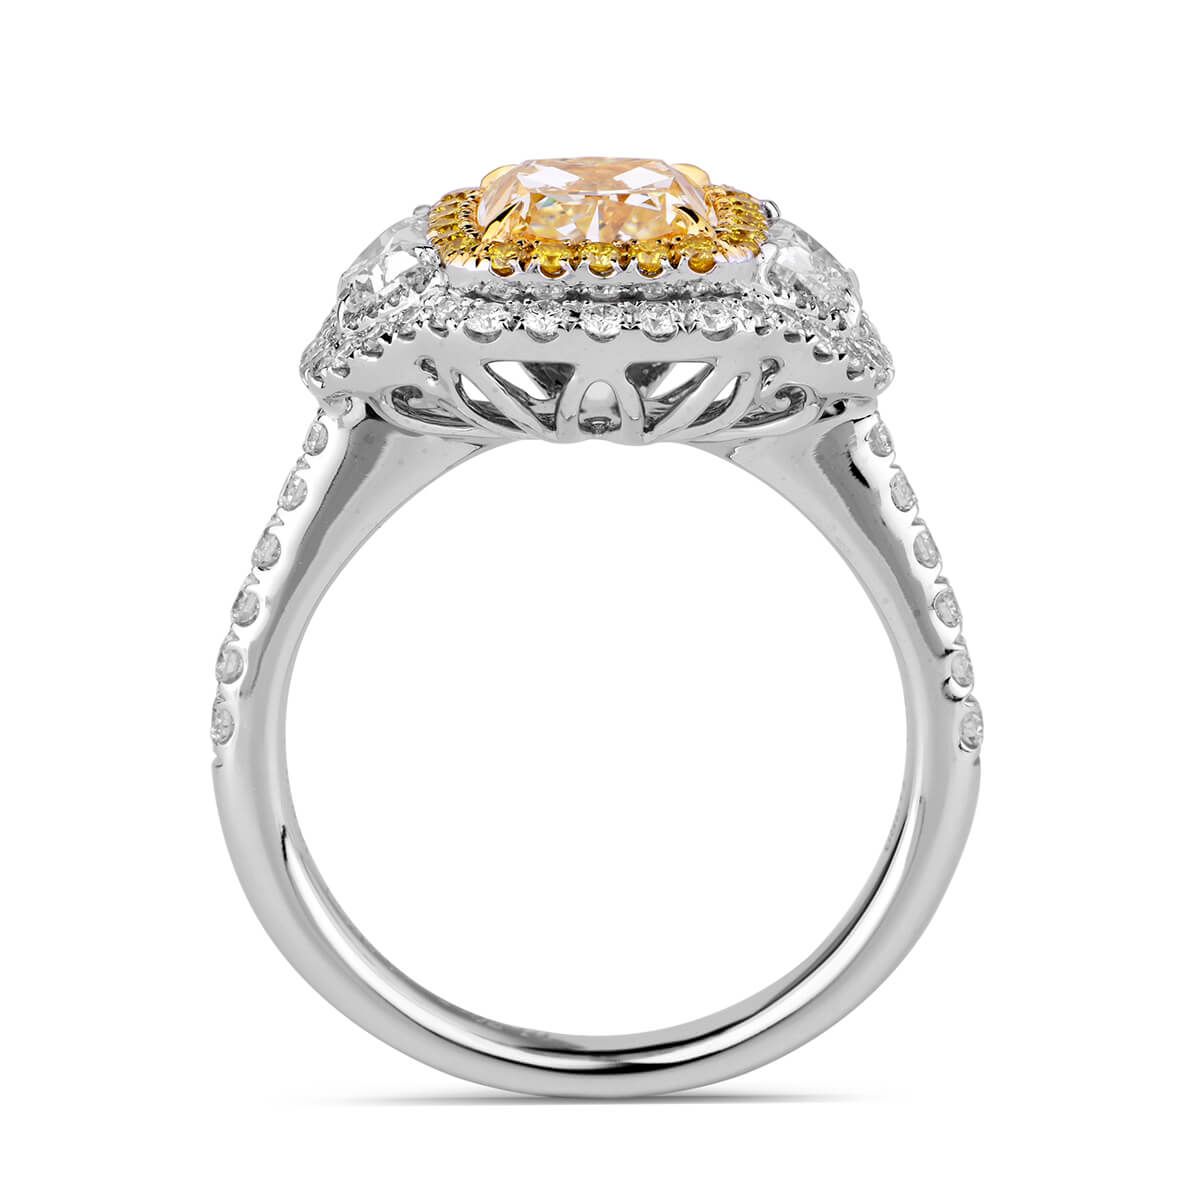 Light Yellow (W-X) Diamond Ring, 2.70 Ct. TW, Cushion shape, GIA Certified, 1176892245